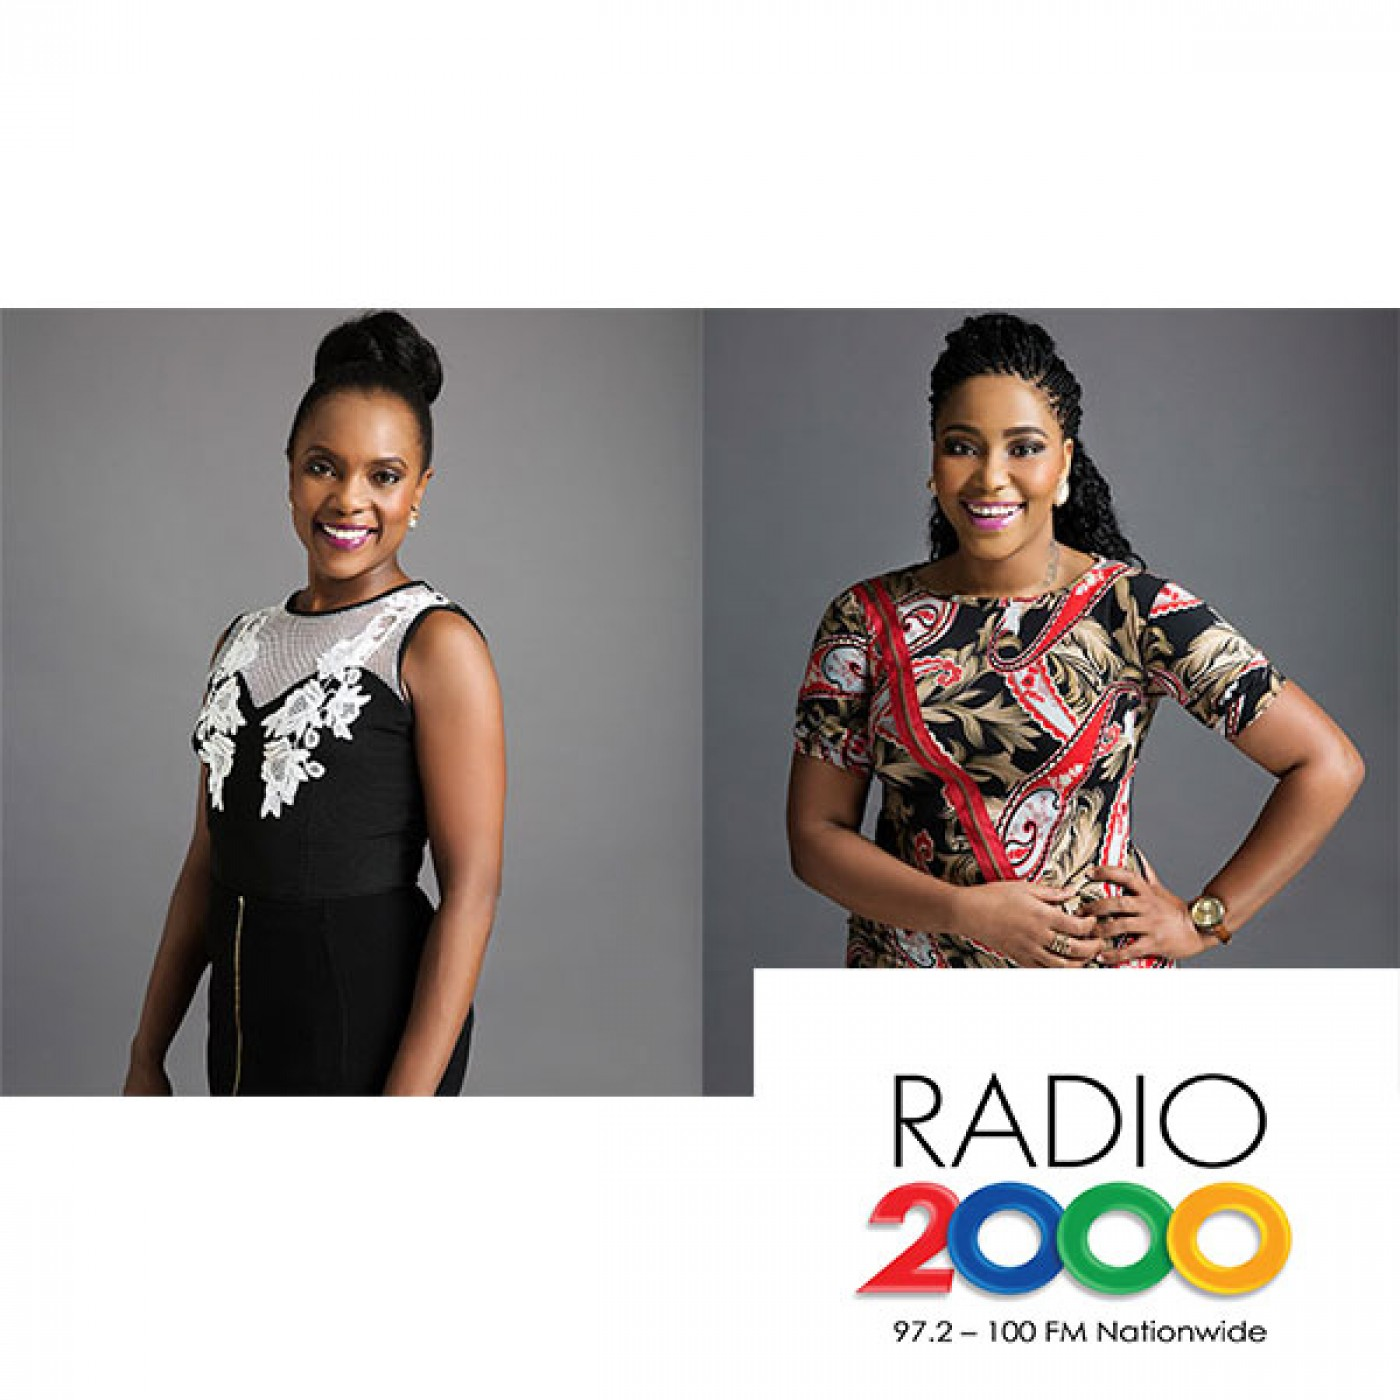 Radio 2000 Summer Campaign - Bertha chats to Sbu Zondi, Durban Tourism's senior marketing - 1 Dec 2017